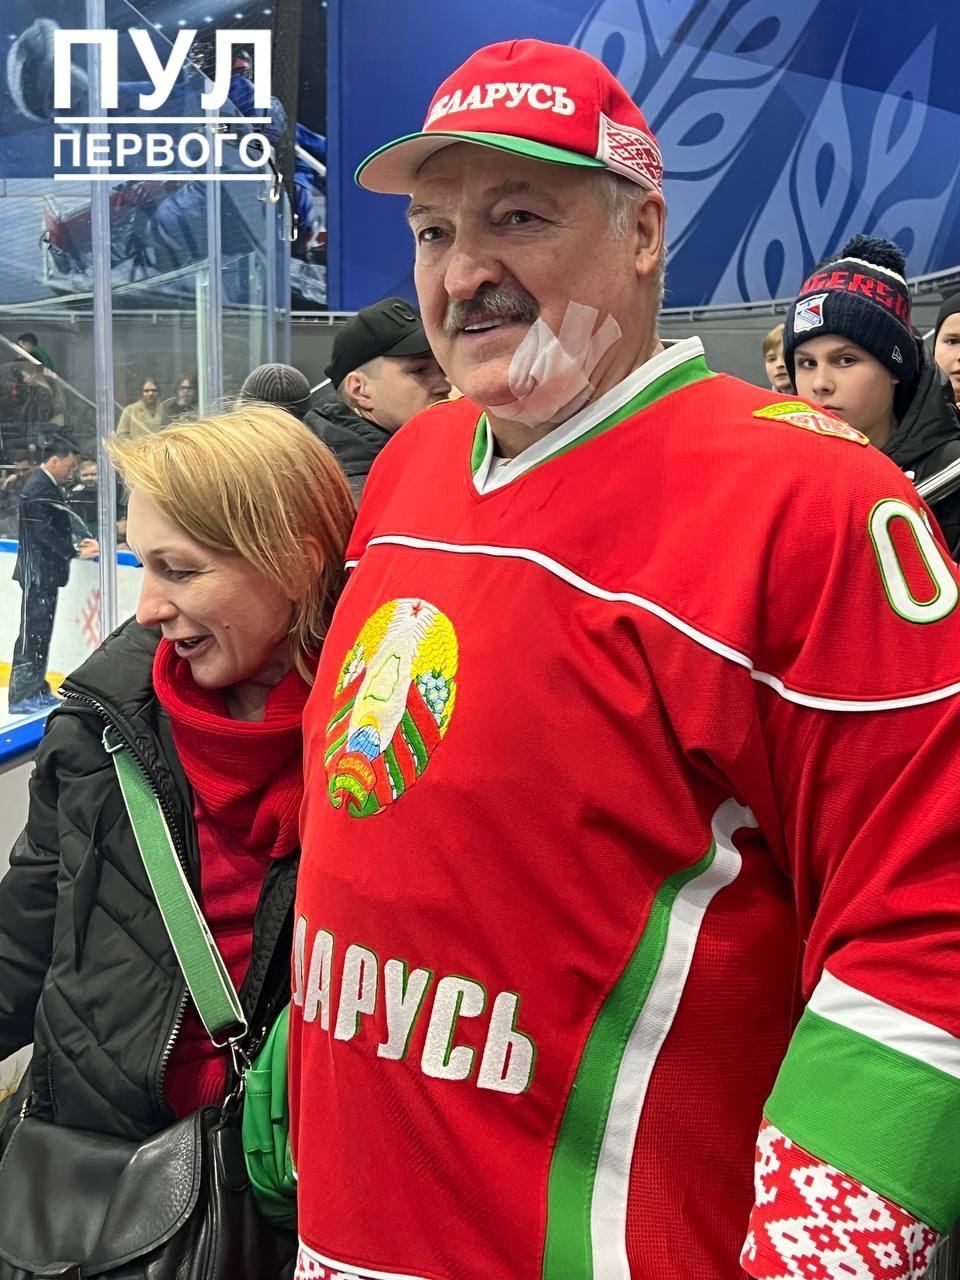 Лукашенко отримав по обличчю / © Пул Першого Telegram-канал